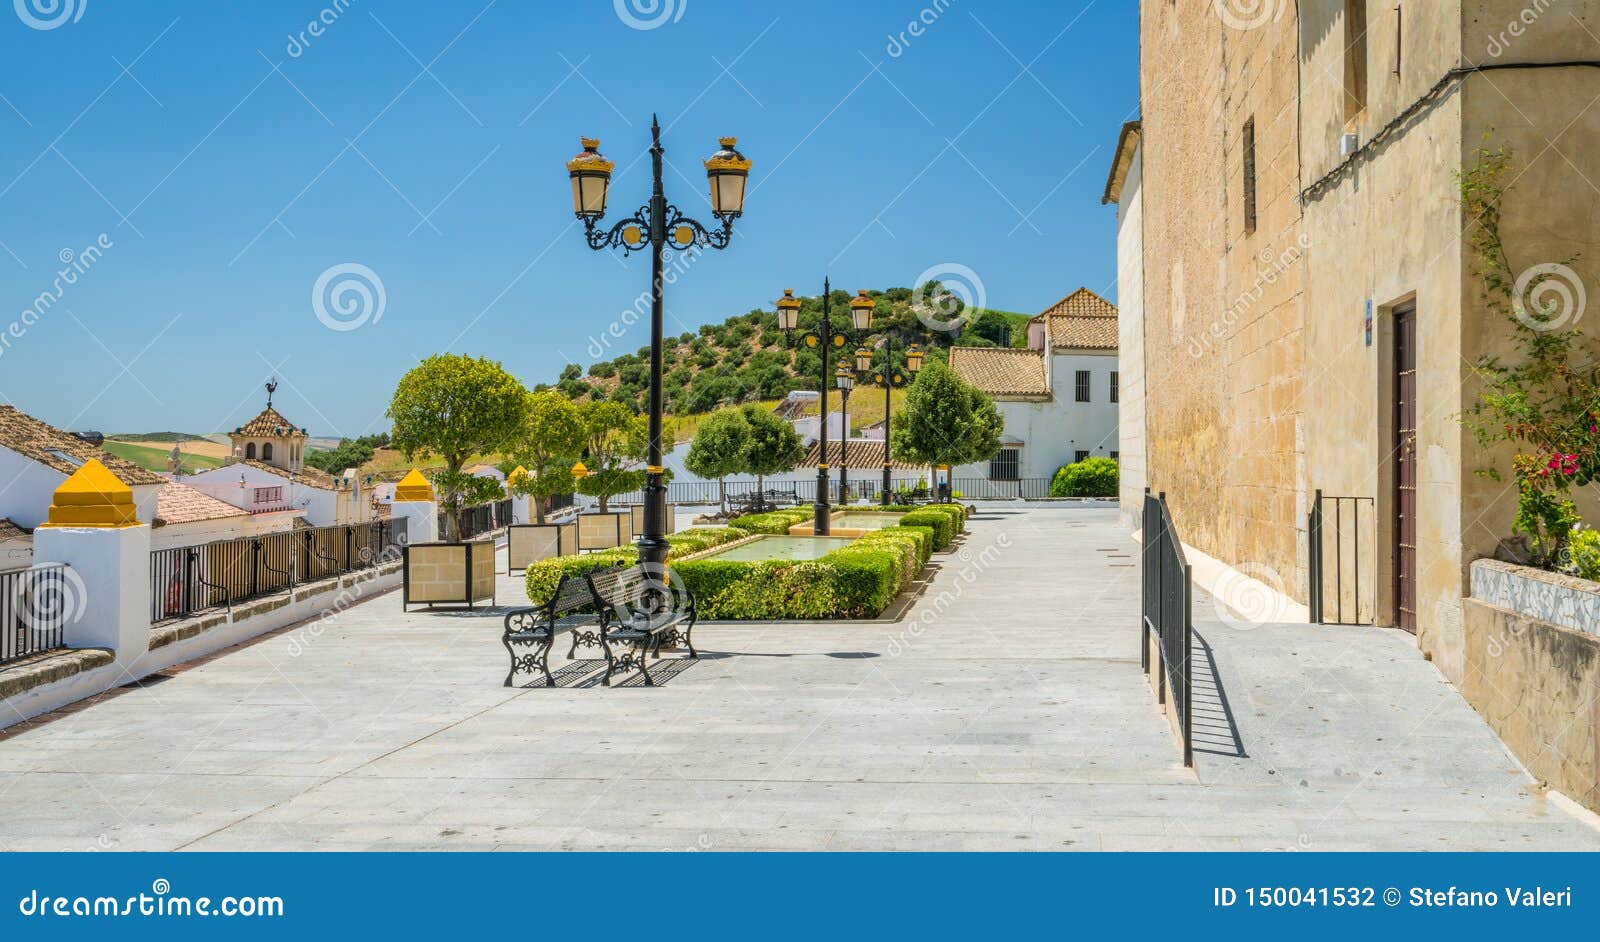 espera, beautiful village in the province of cadiz, andalusia, spain.